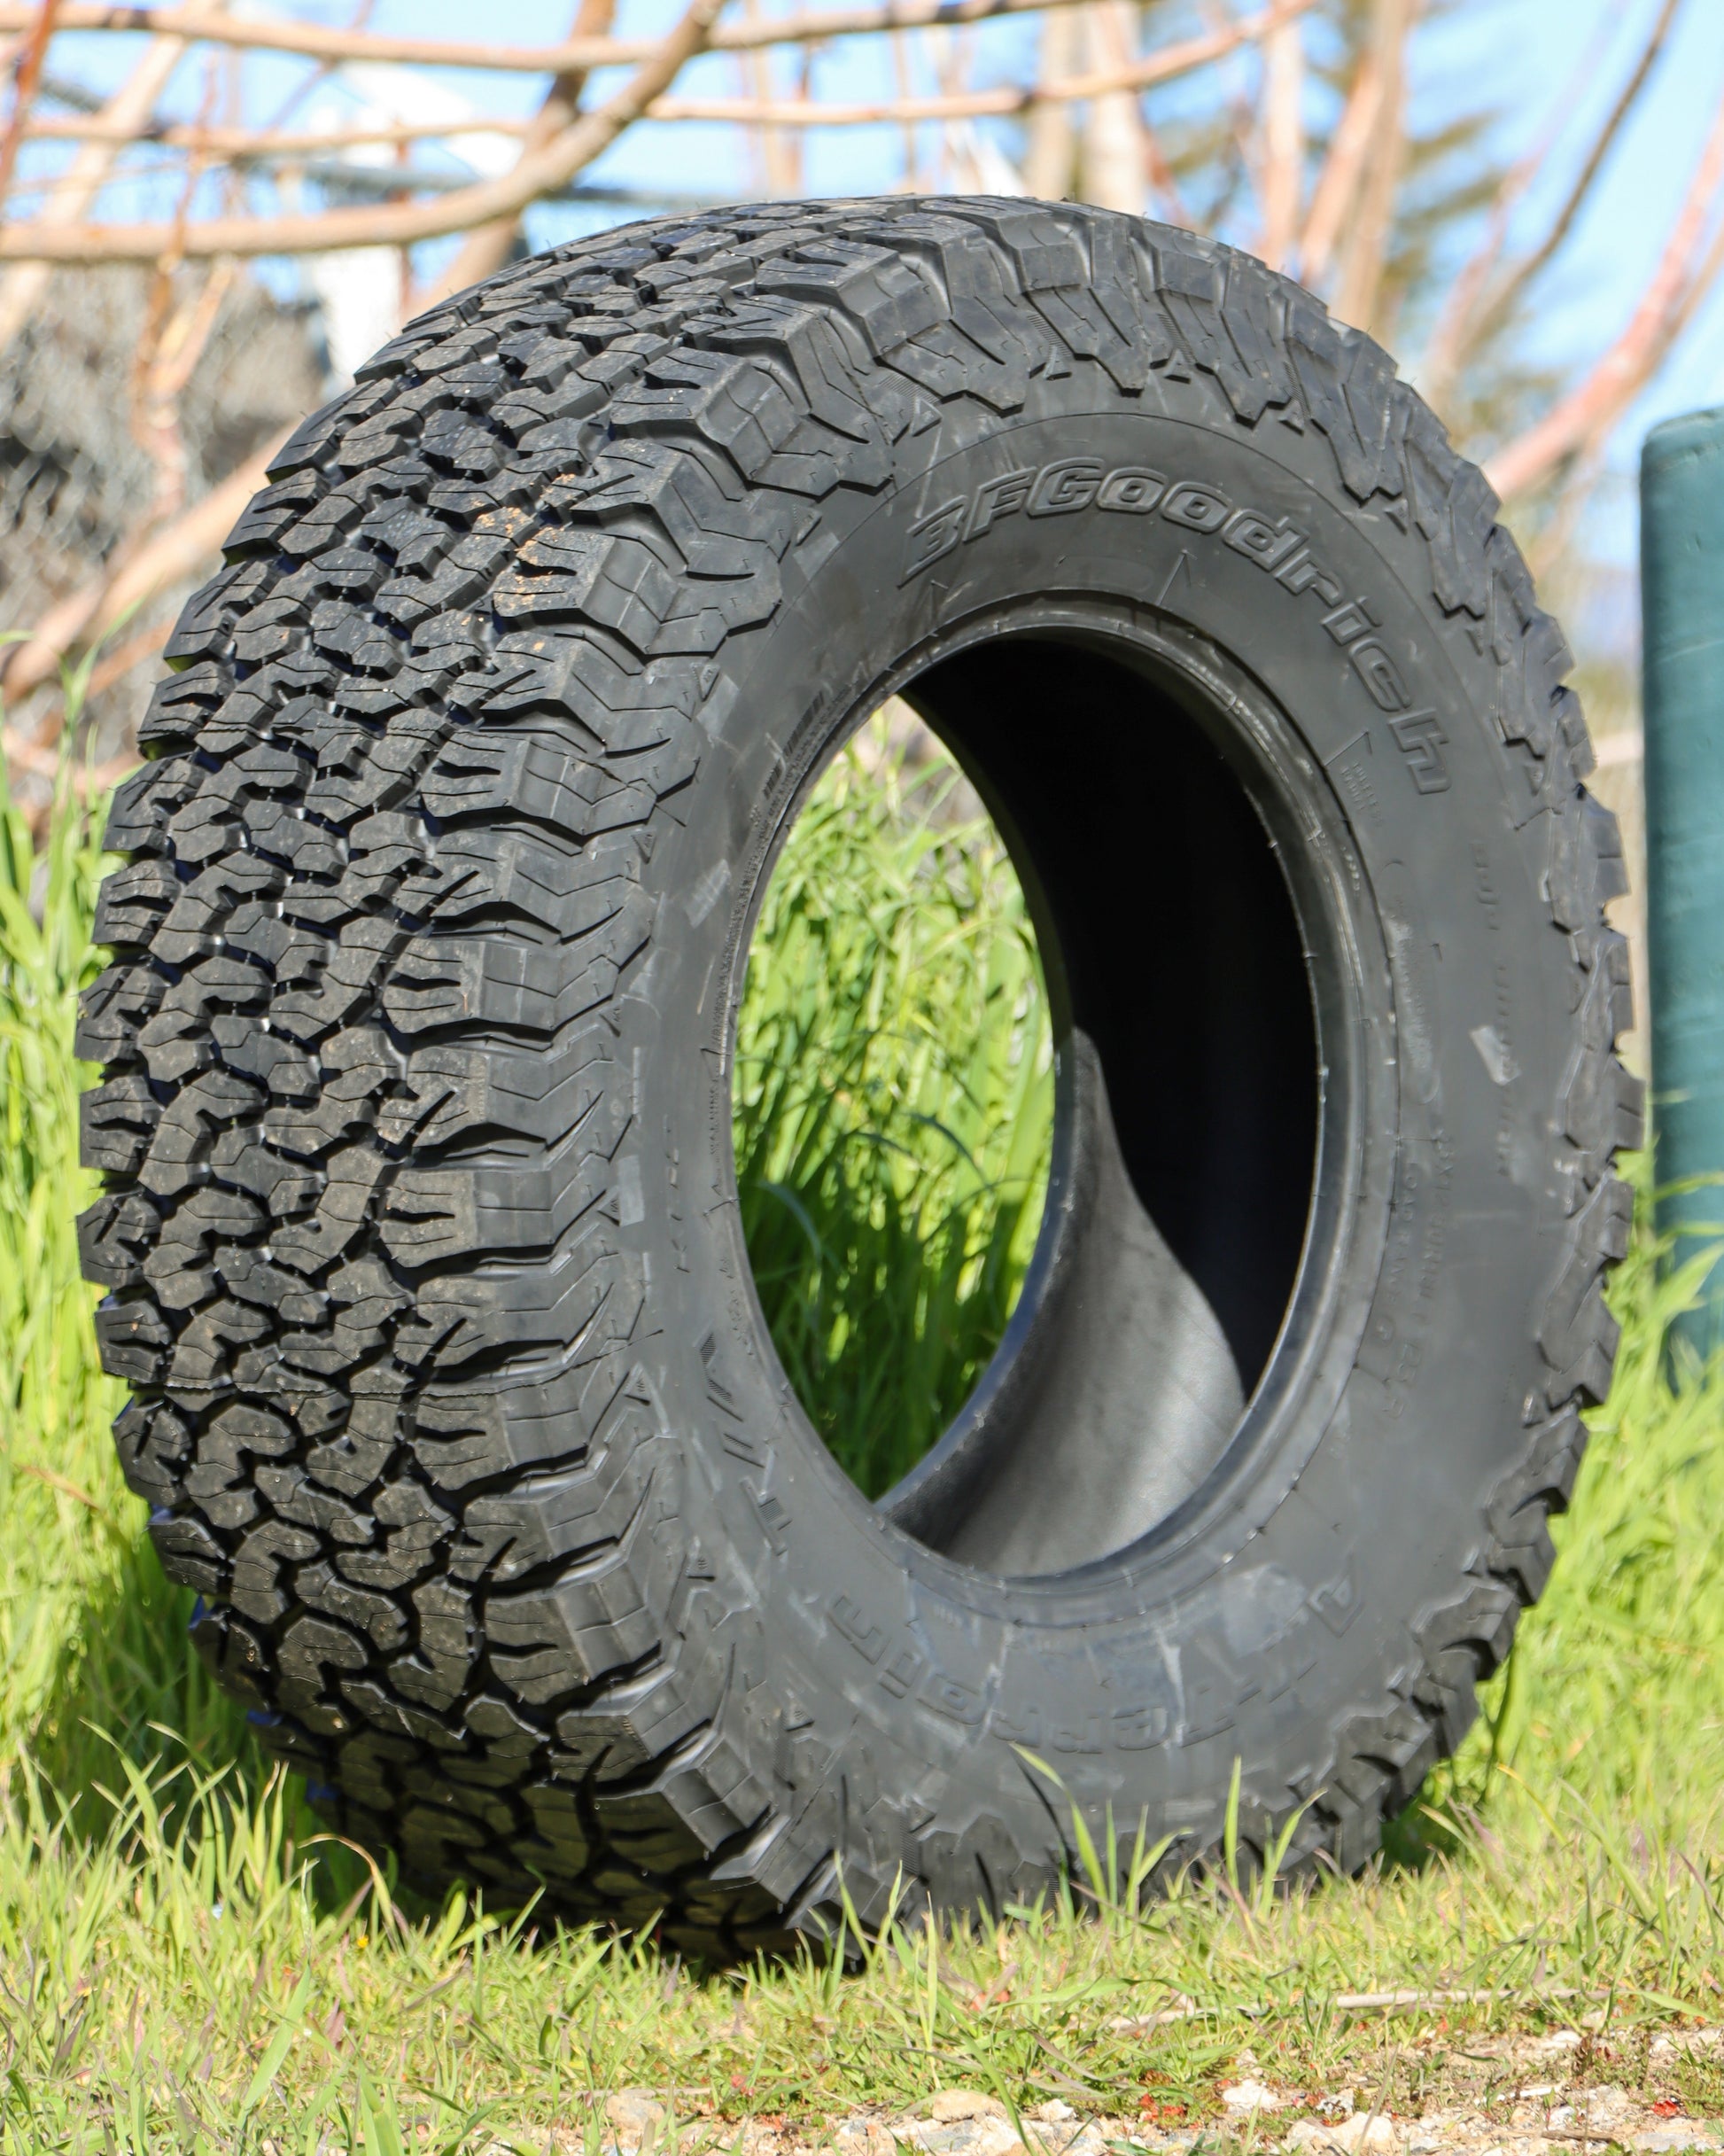 35x12.50r18 BFG KO2 all-terrain tire sitting in some grass.